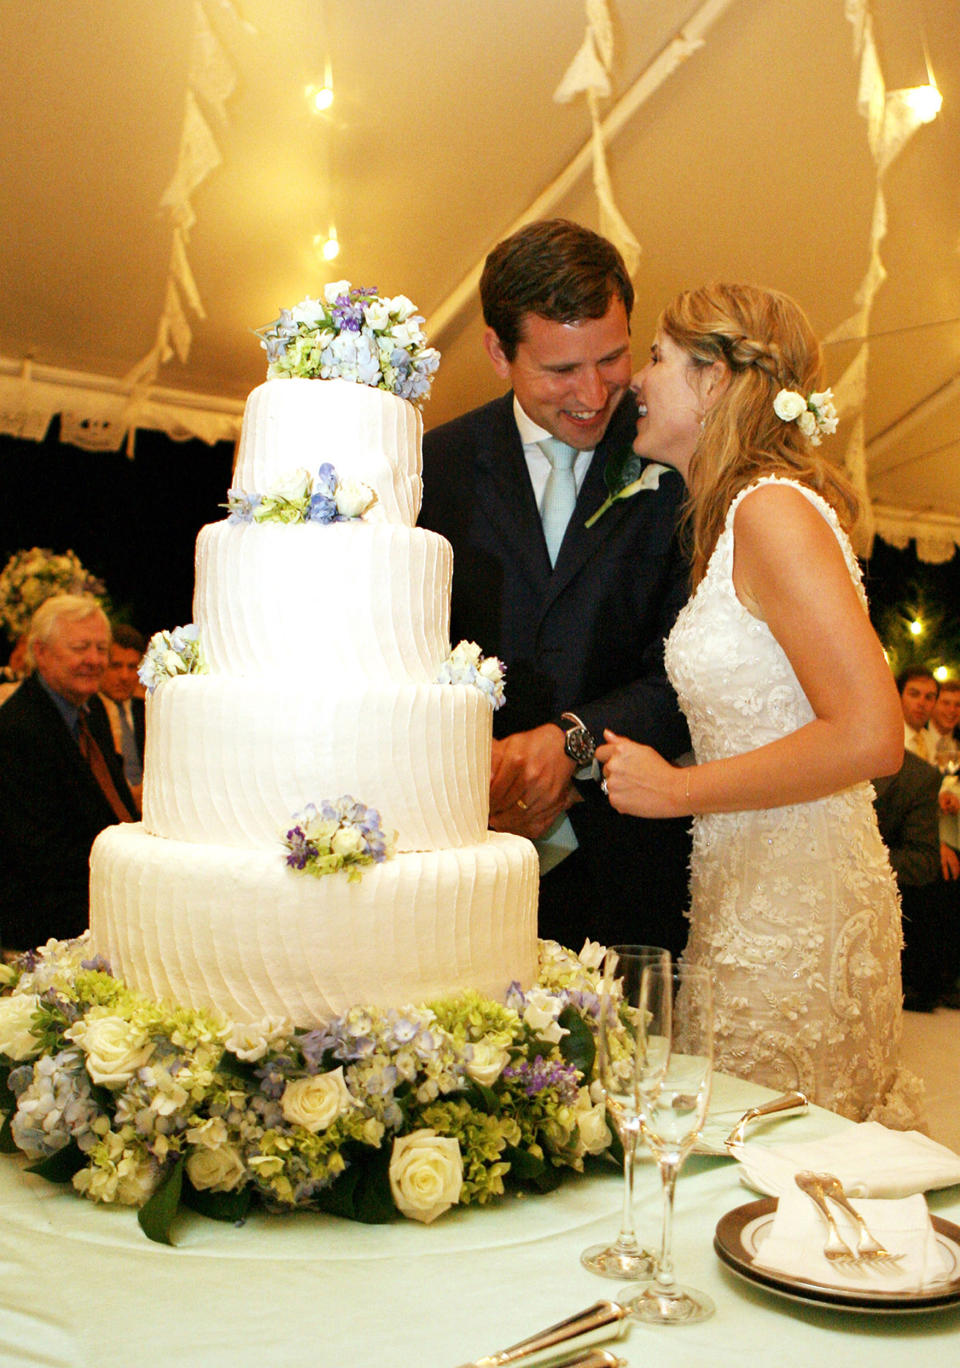 Henry Hager And Jenna Bush Wedding (Shealah Craighead / The White House via Getty Images)